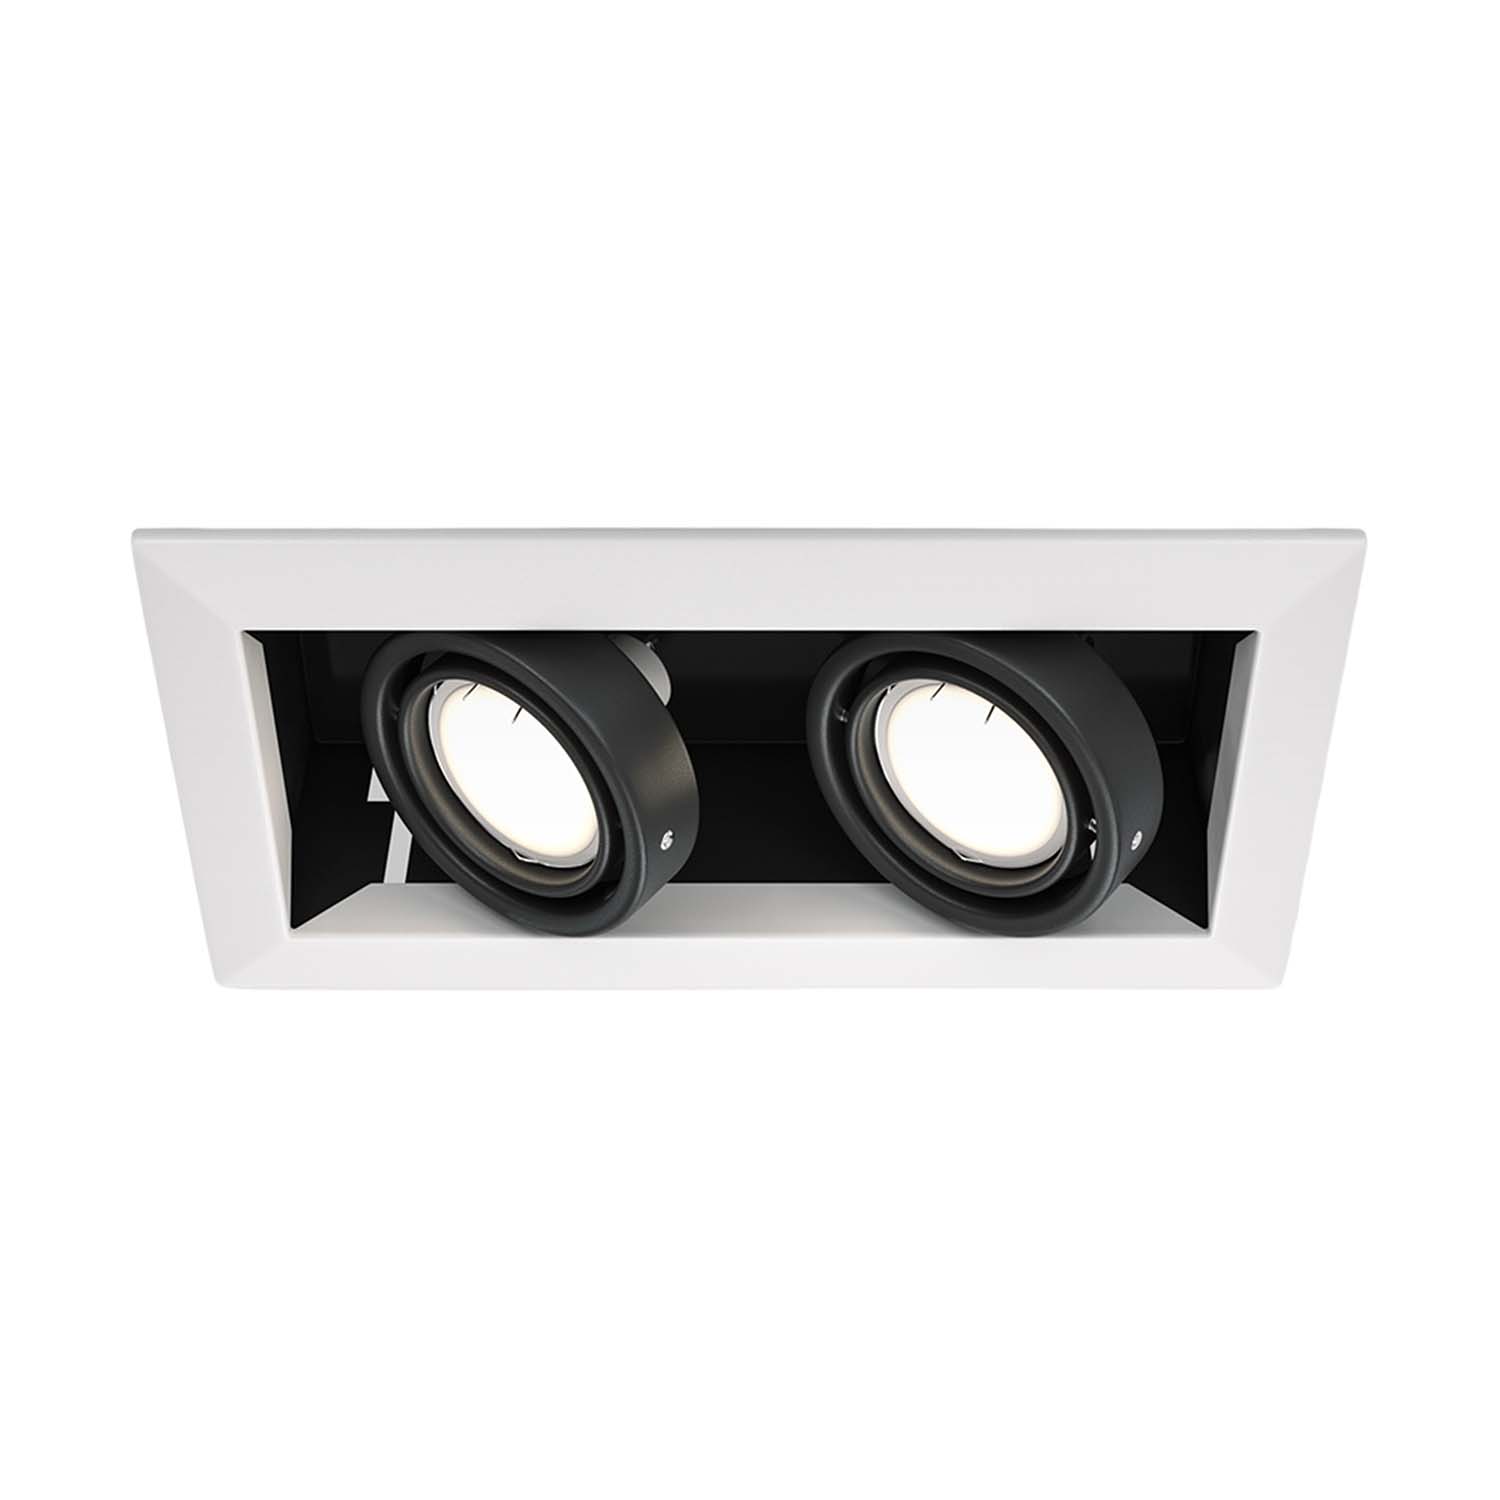 METAL MODERN B - Double square spot black or white, adjustable design